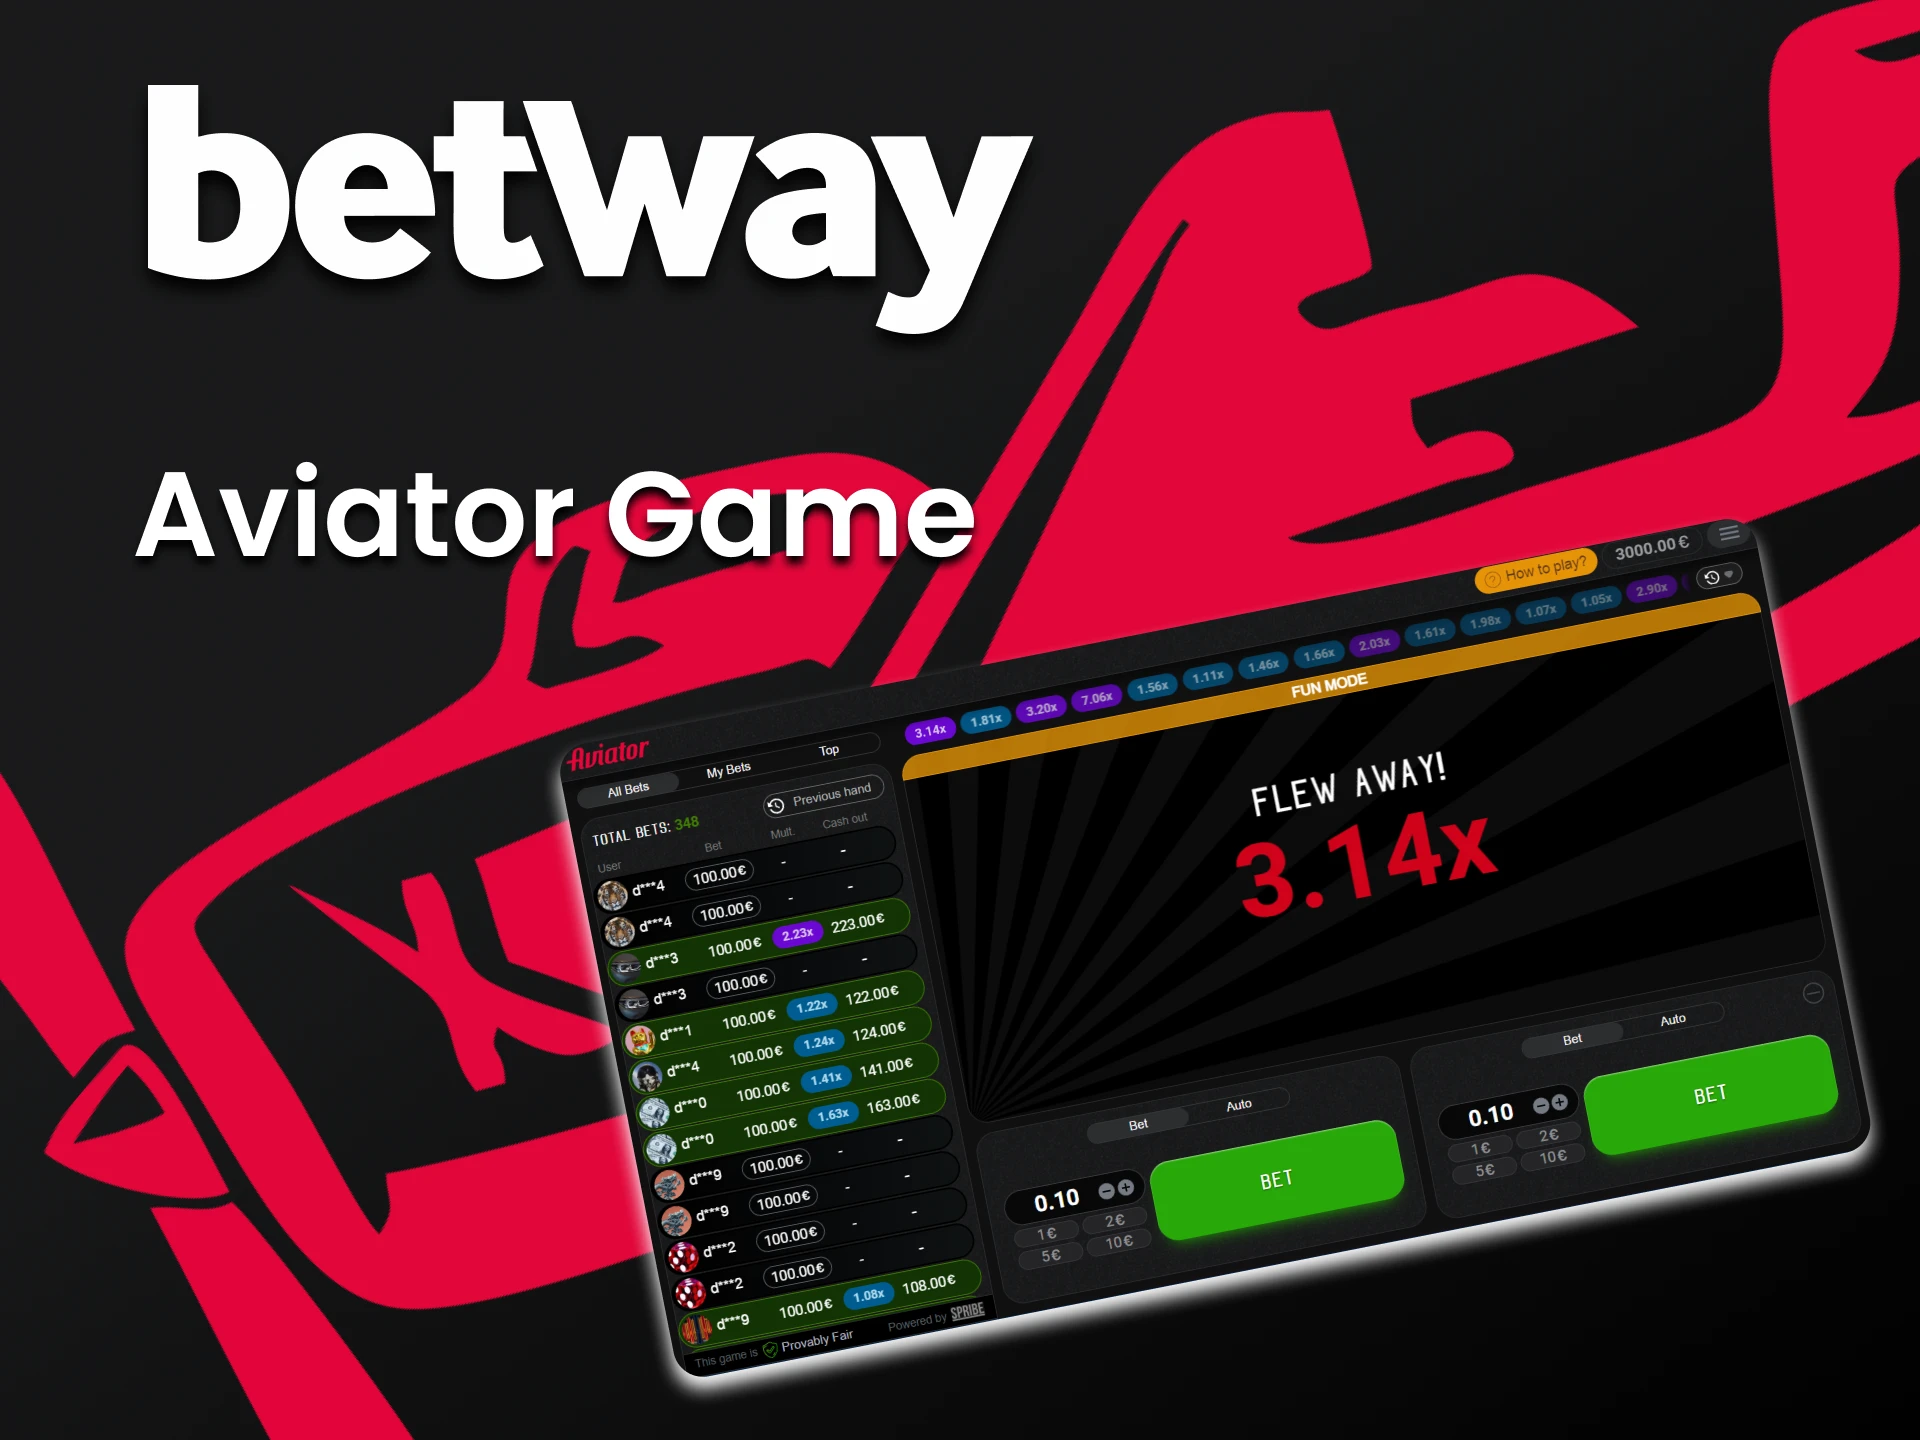 Play Aviator on Betway.